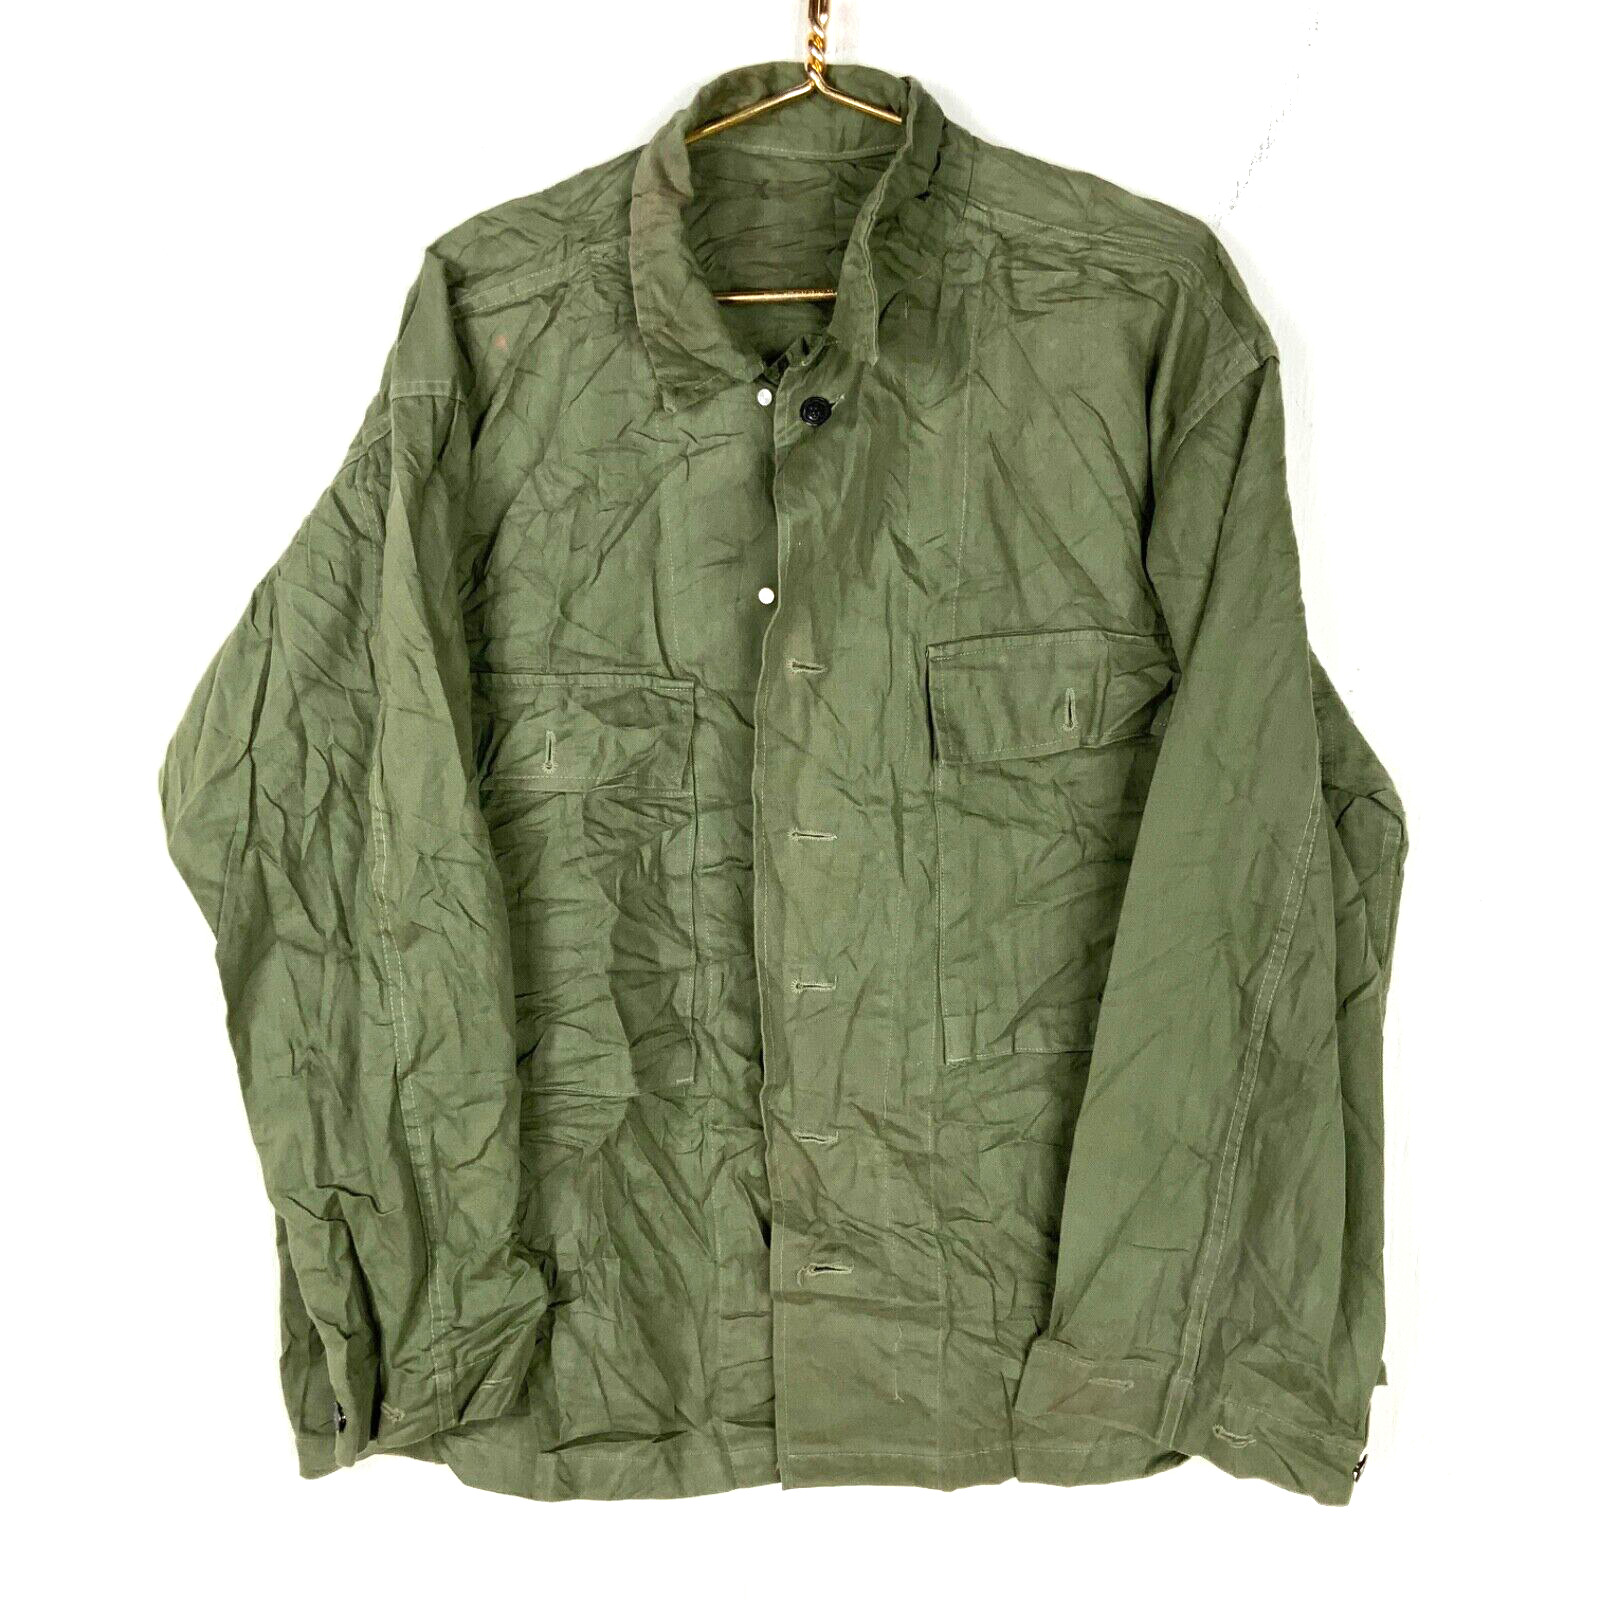 Vintage Us Military 13 Star Hbt Fatigue Shirt Jacket Size 2XL Green 40s 50s